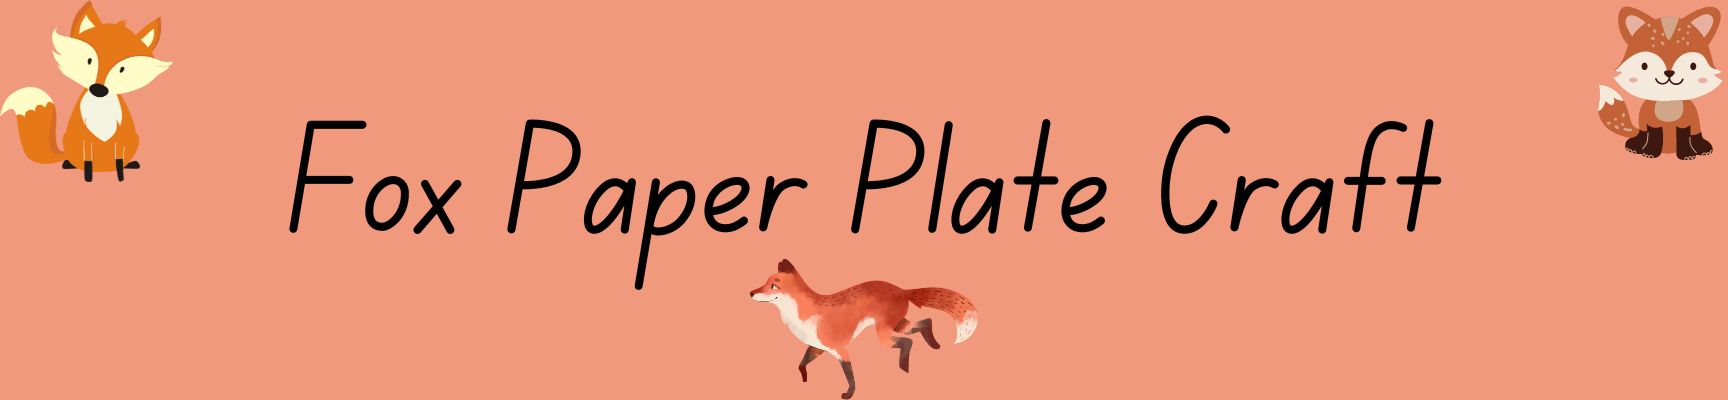 Fox Paper Plate Craft